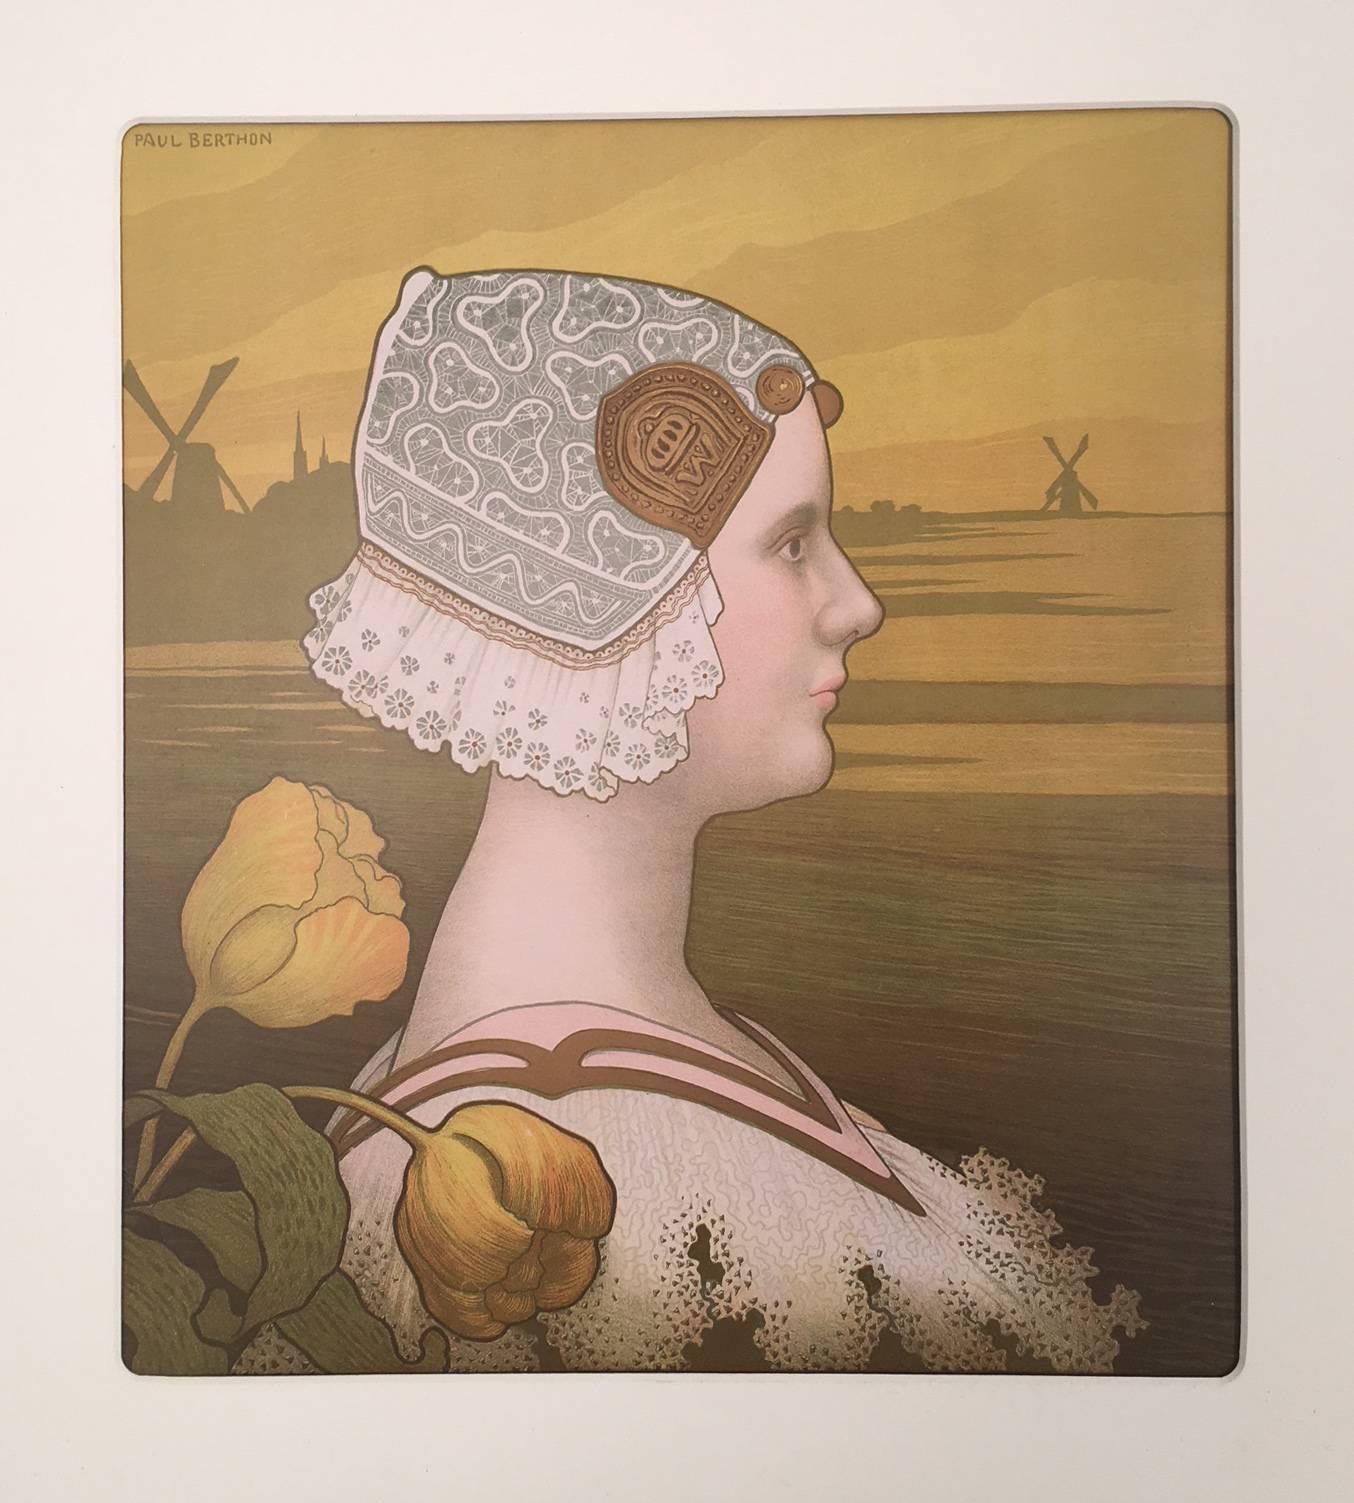 Queen Wilhelmina of the Netherlands - Print by Paul Berthon